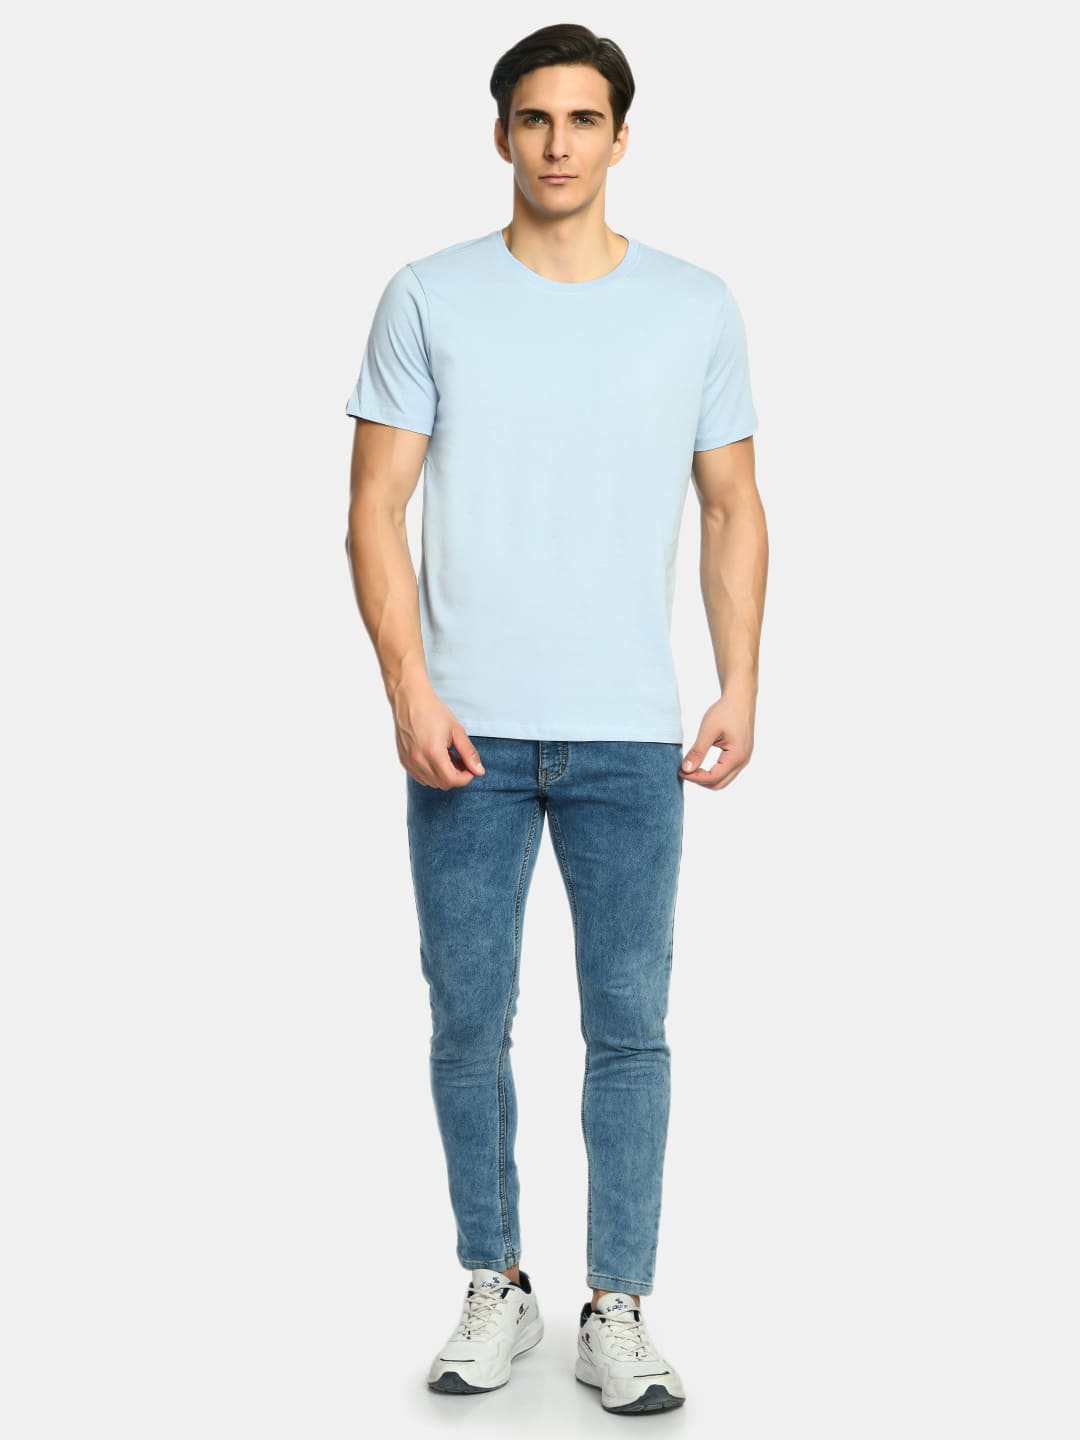 Men's Plain Baby Blue Round Neck T-Shirt